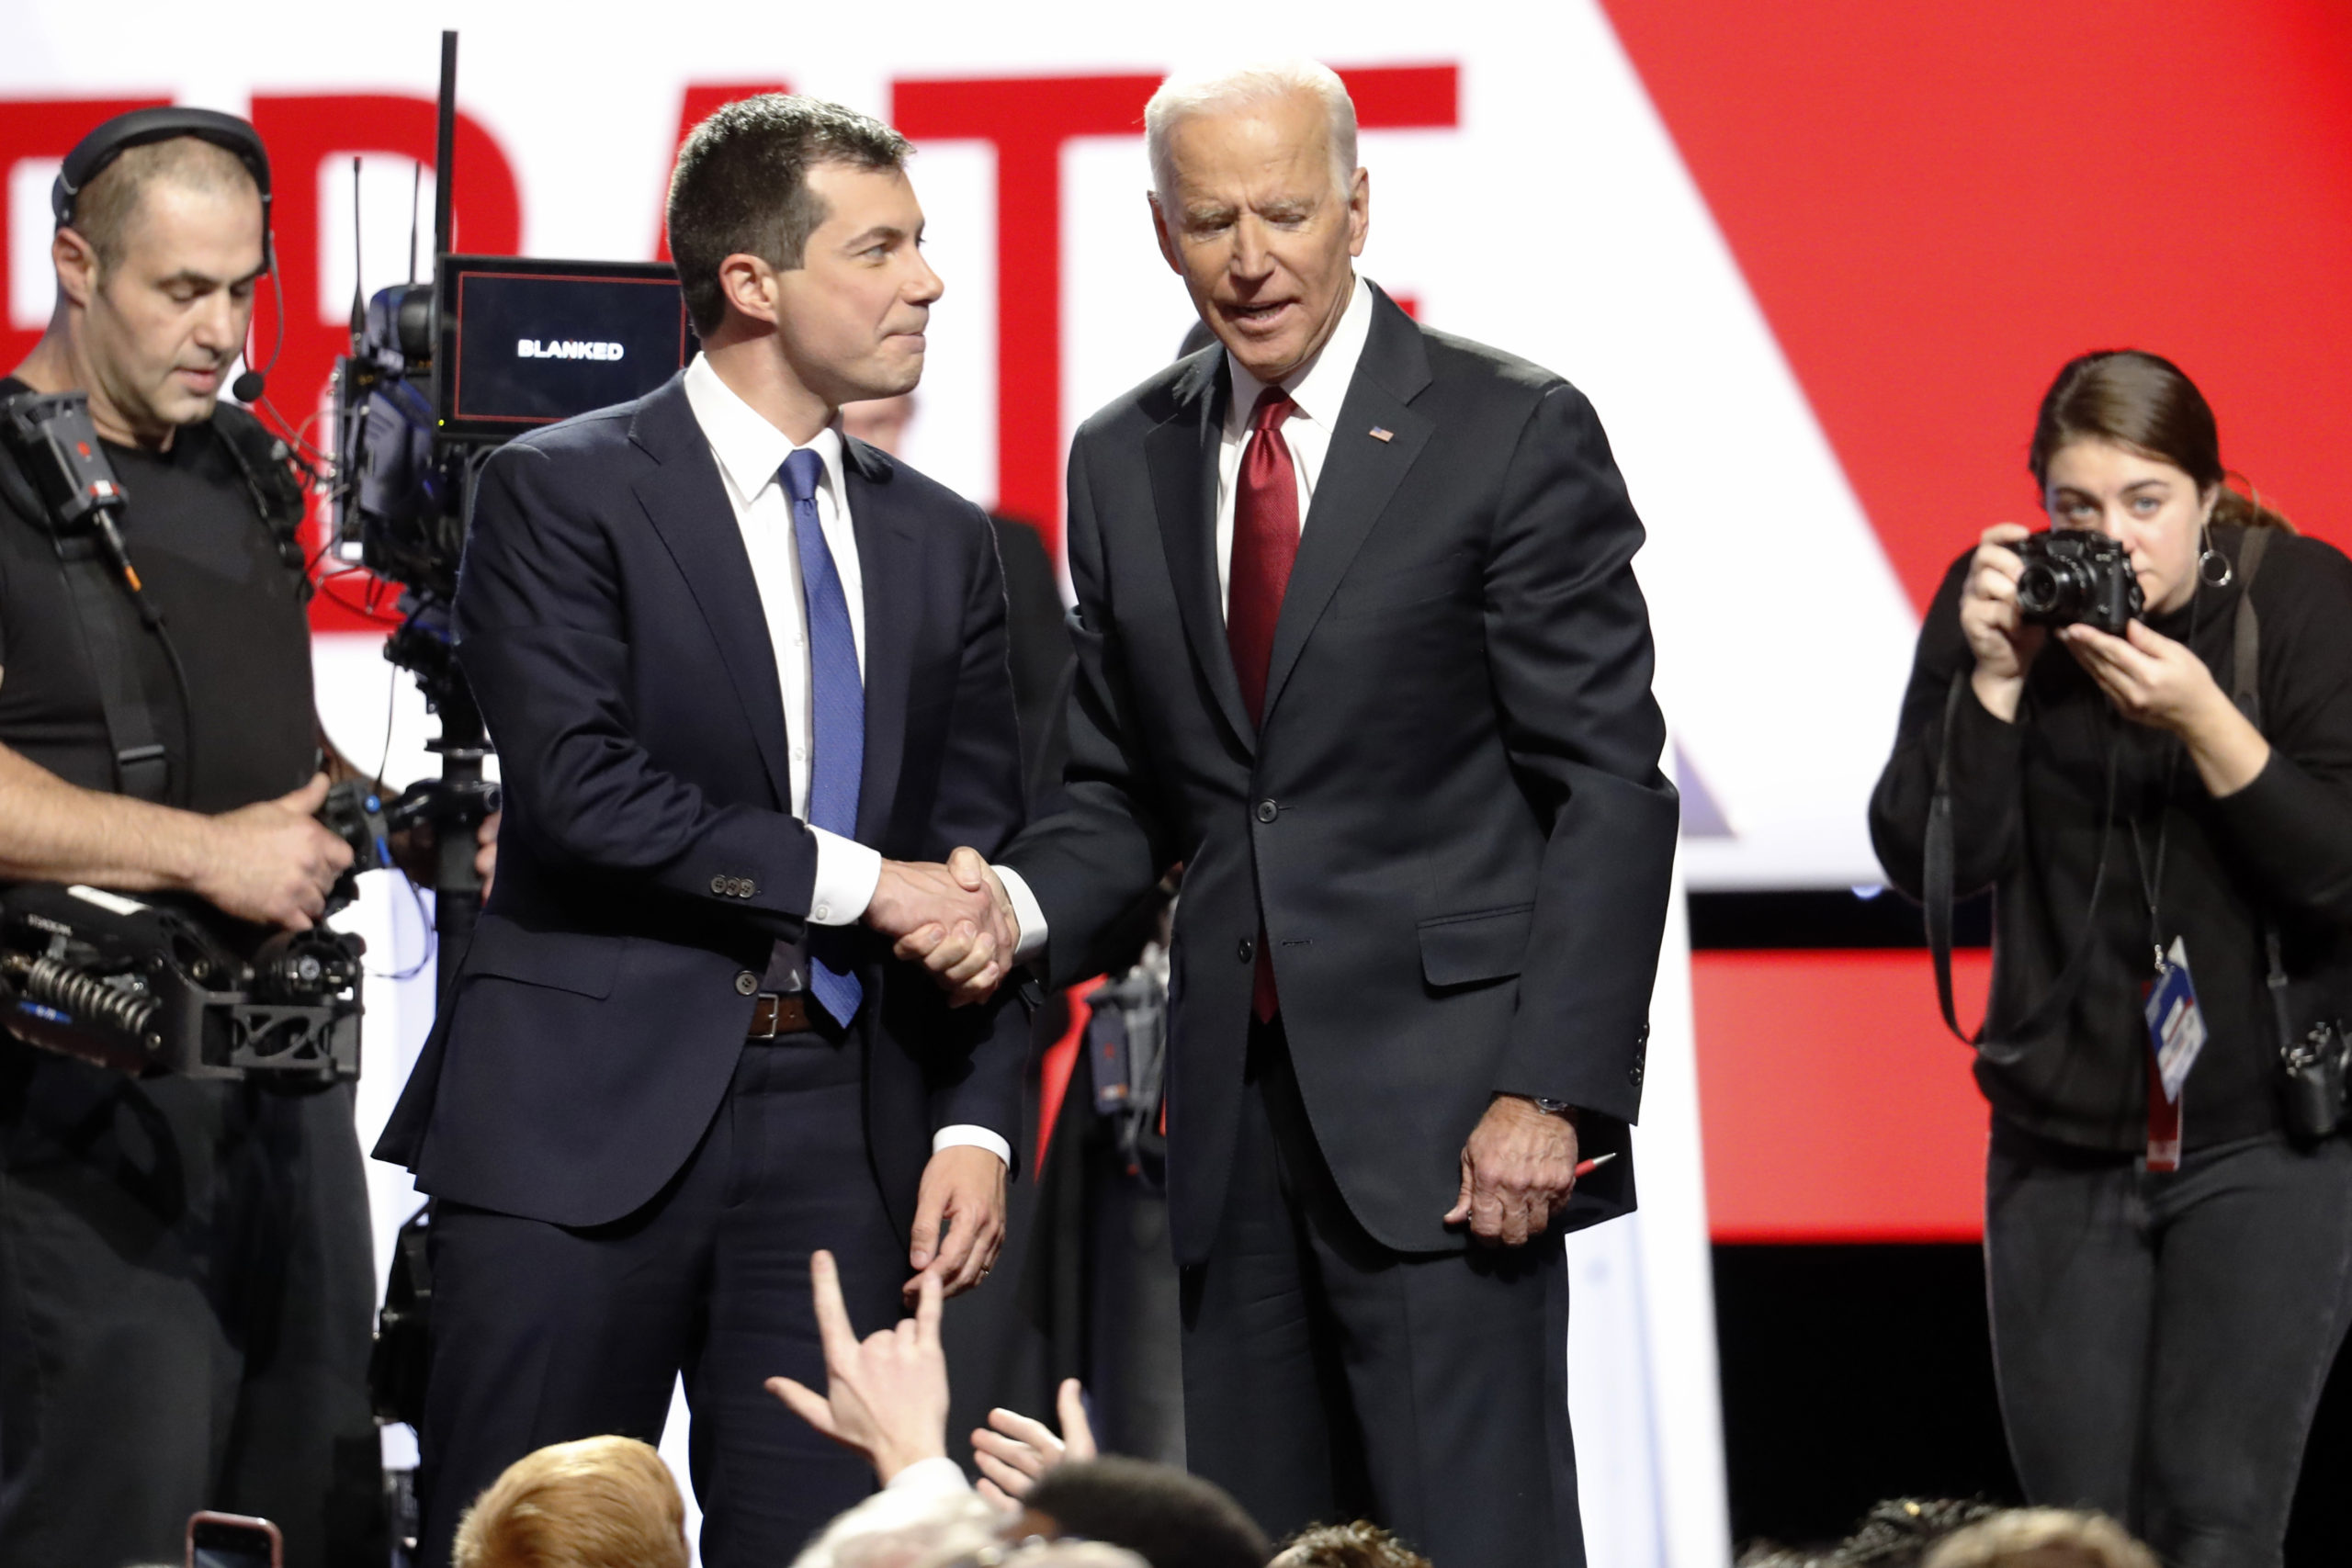 Pete Buttigieg shakes hands with Joe Biden.